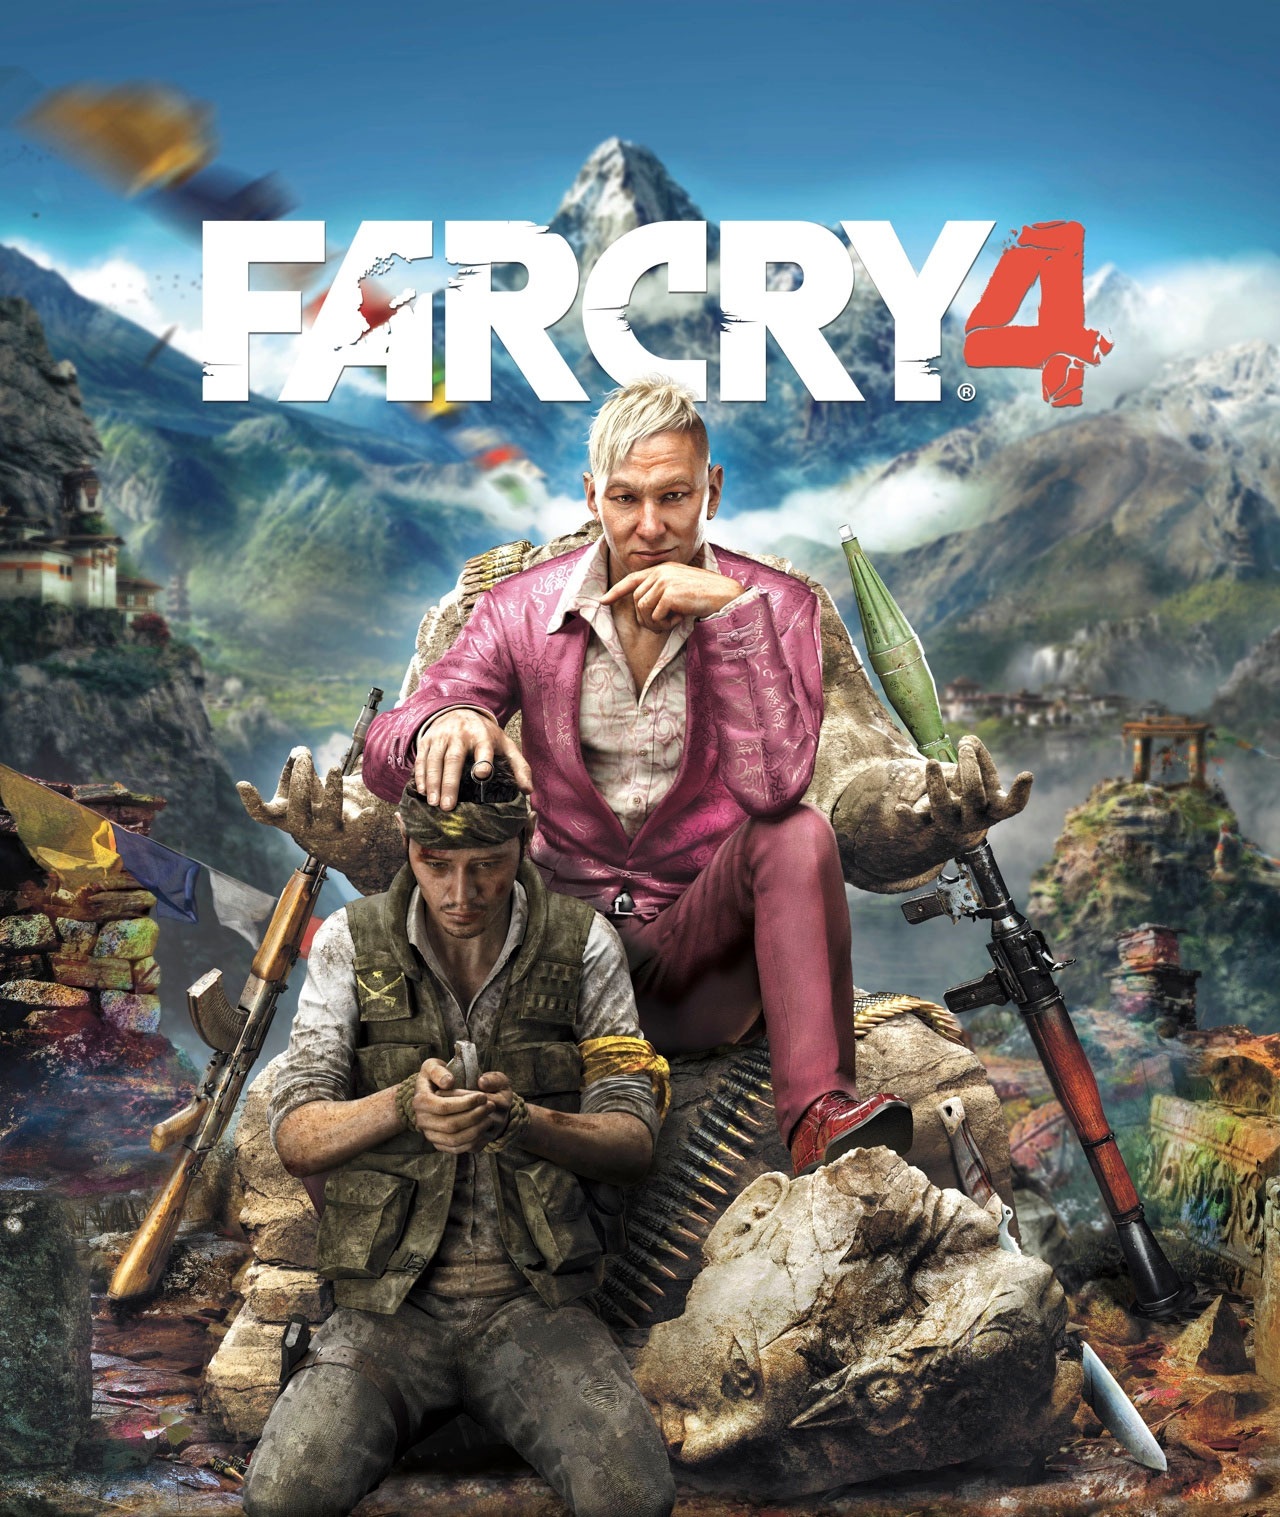 Far Cry 4 - Far Cry 4  Dublador trolou assistente da Ubisoft para  conseguir papel de Pagan Min - The Enemy